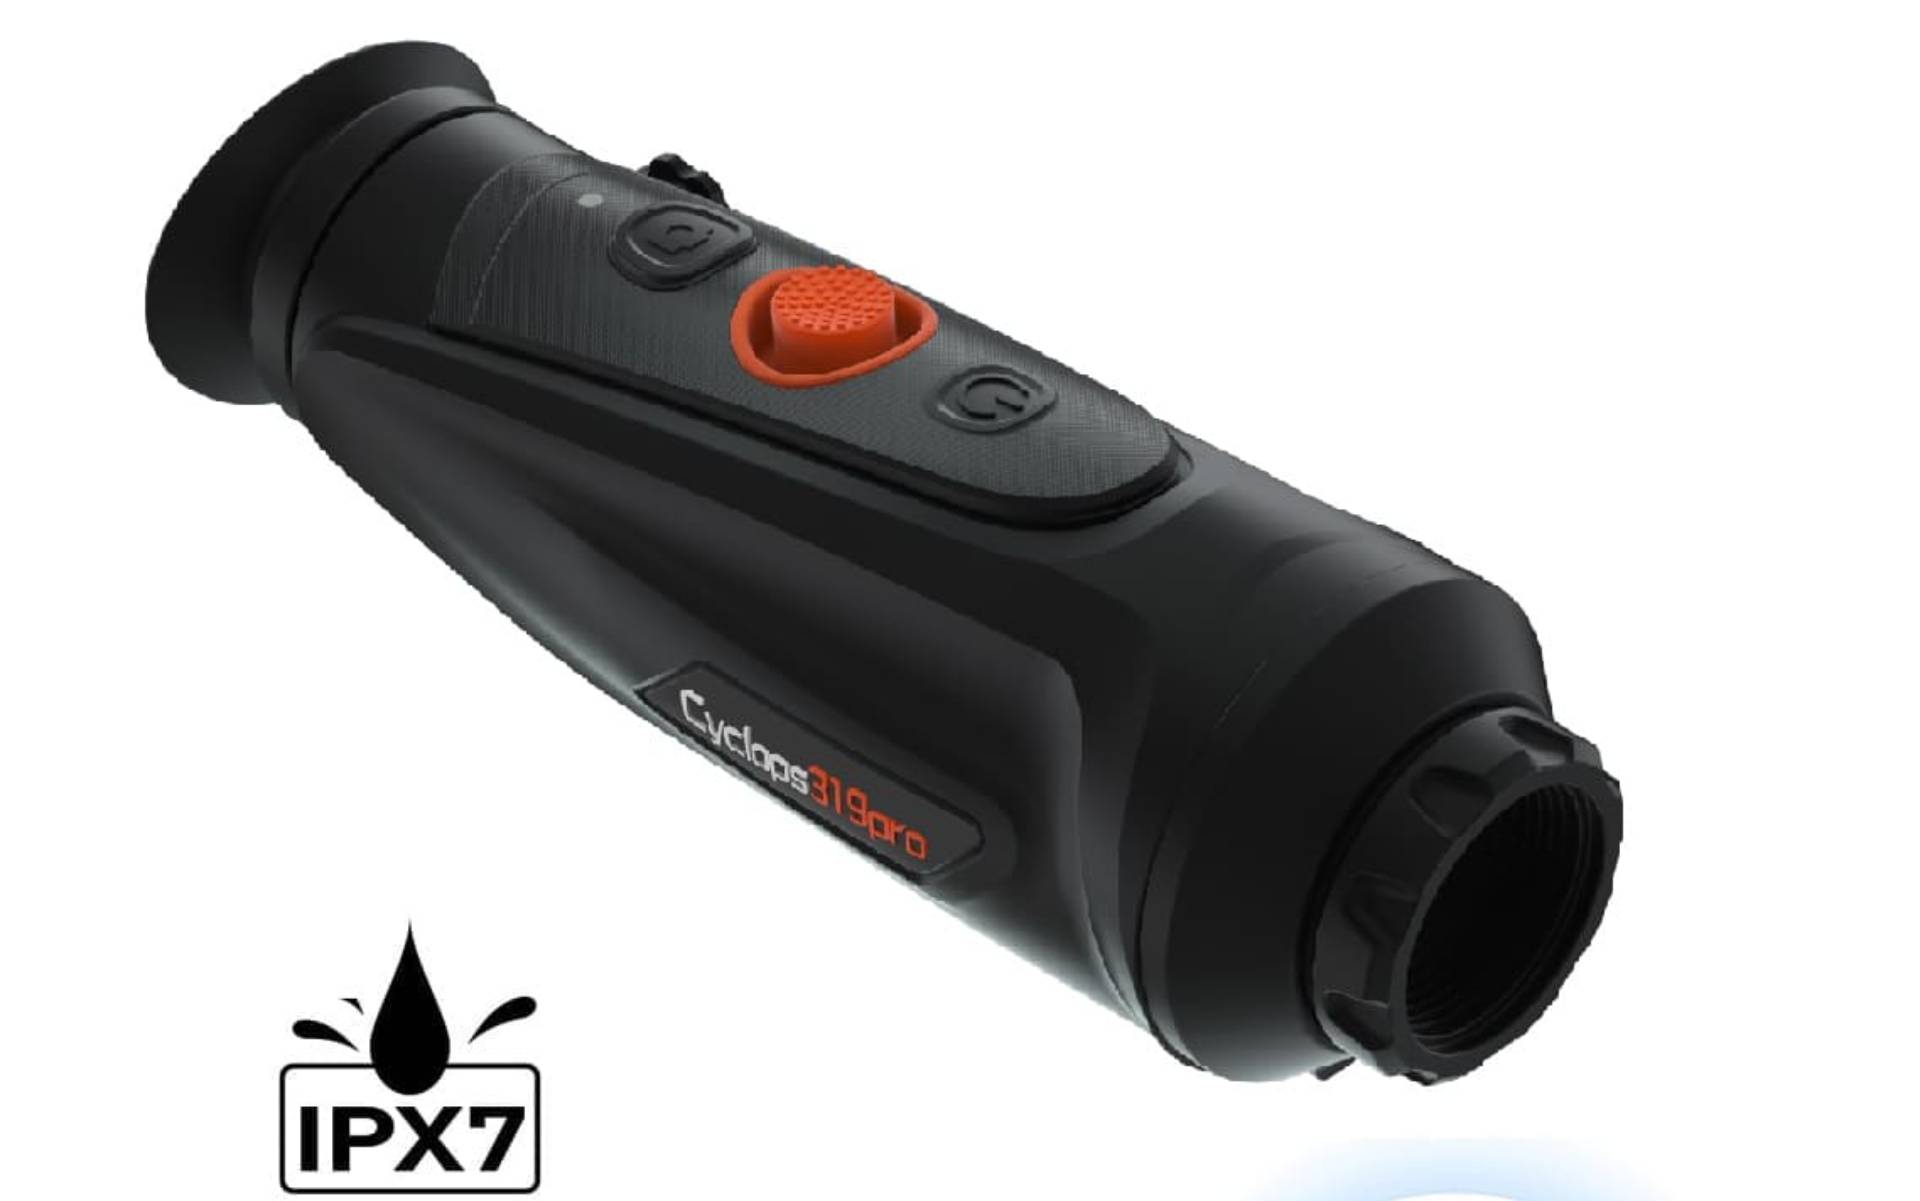 Thermtec Cyclops 319 Pro Wärmebildkamera  